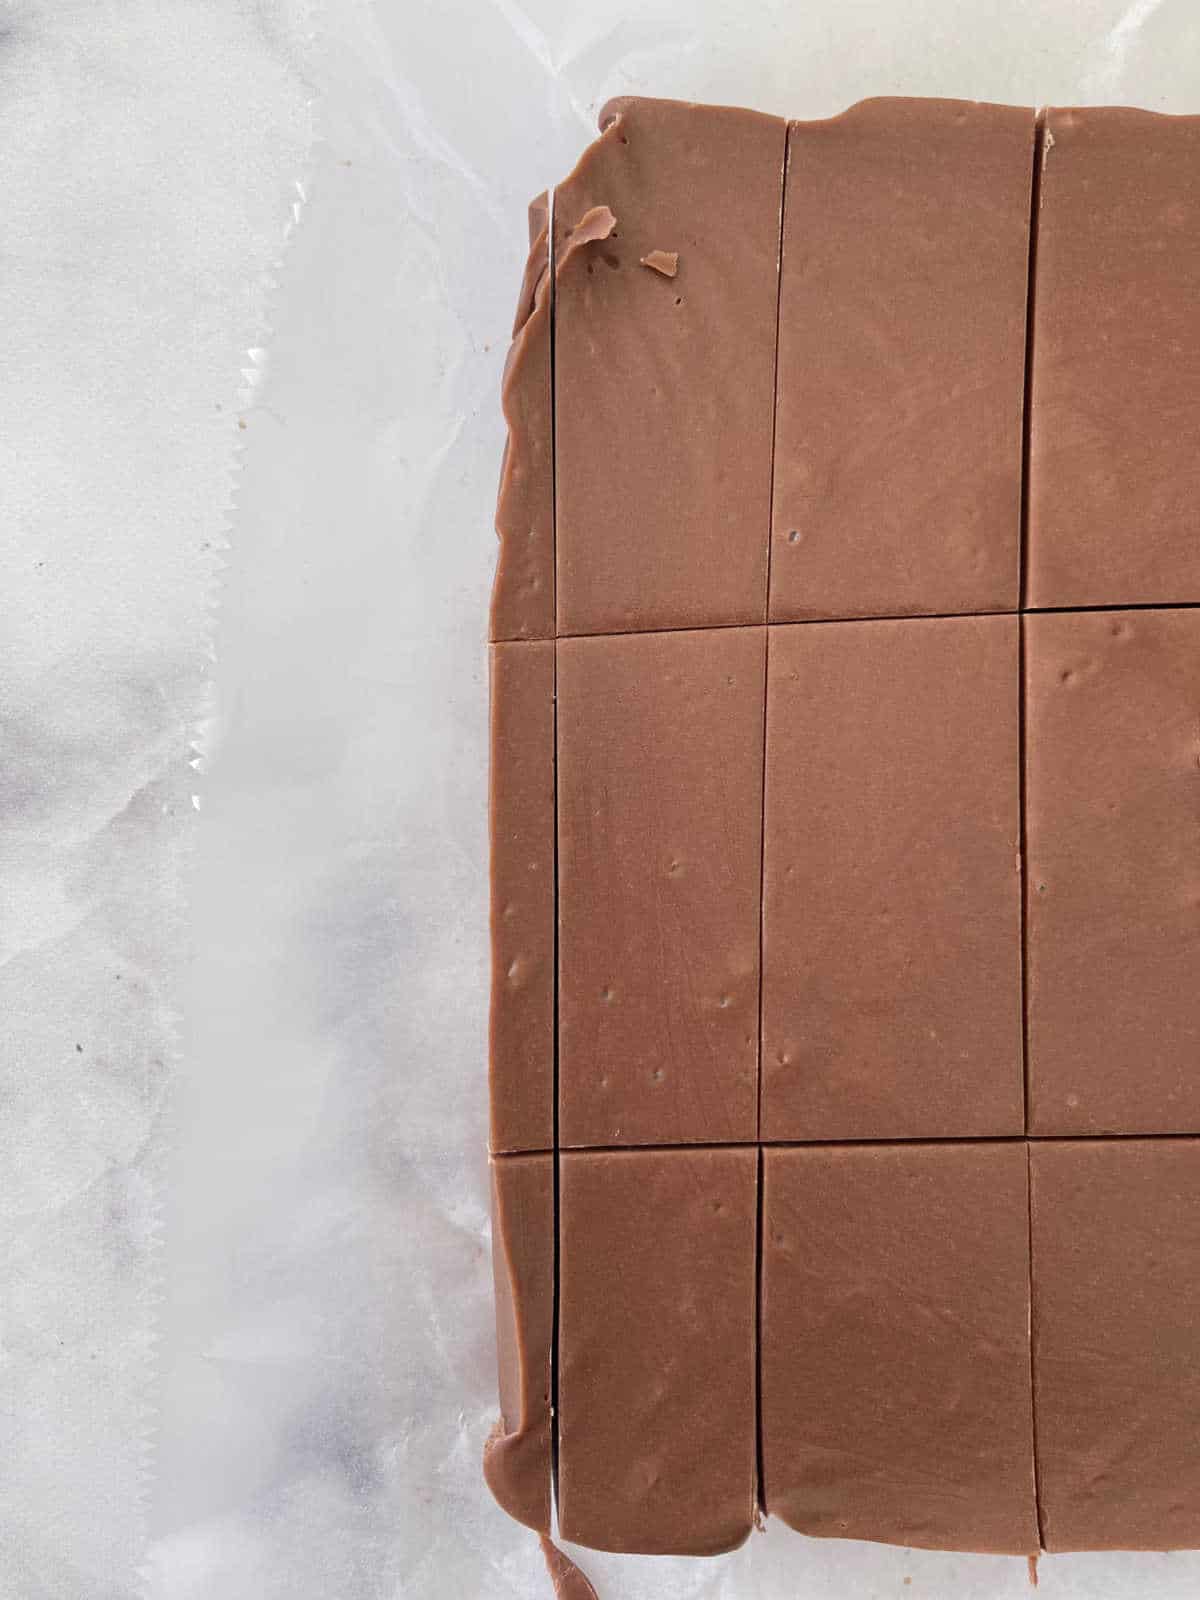 sliced chocolate fudge on marble background.